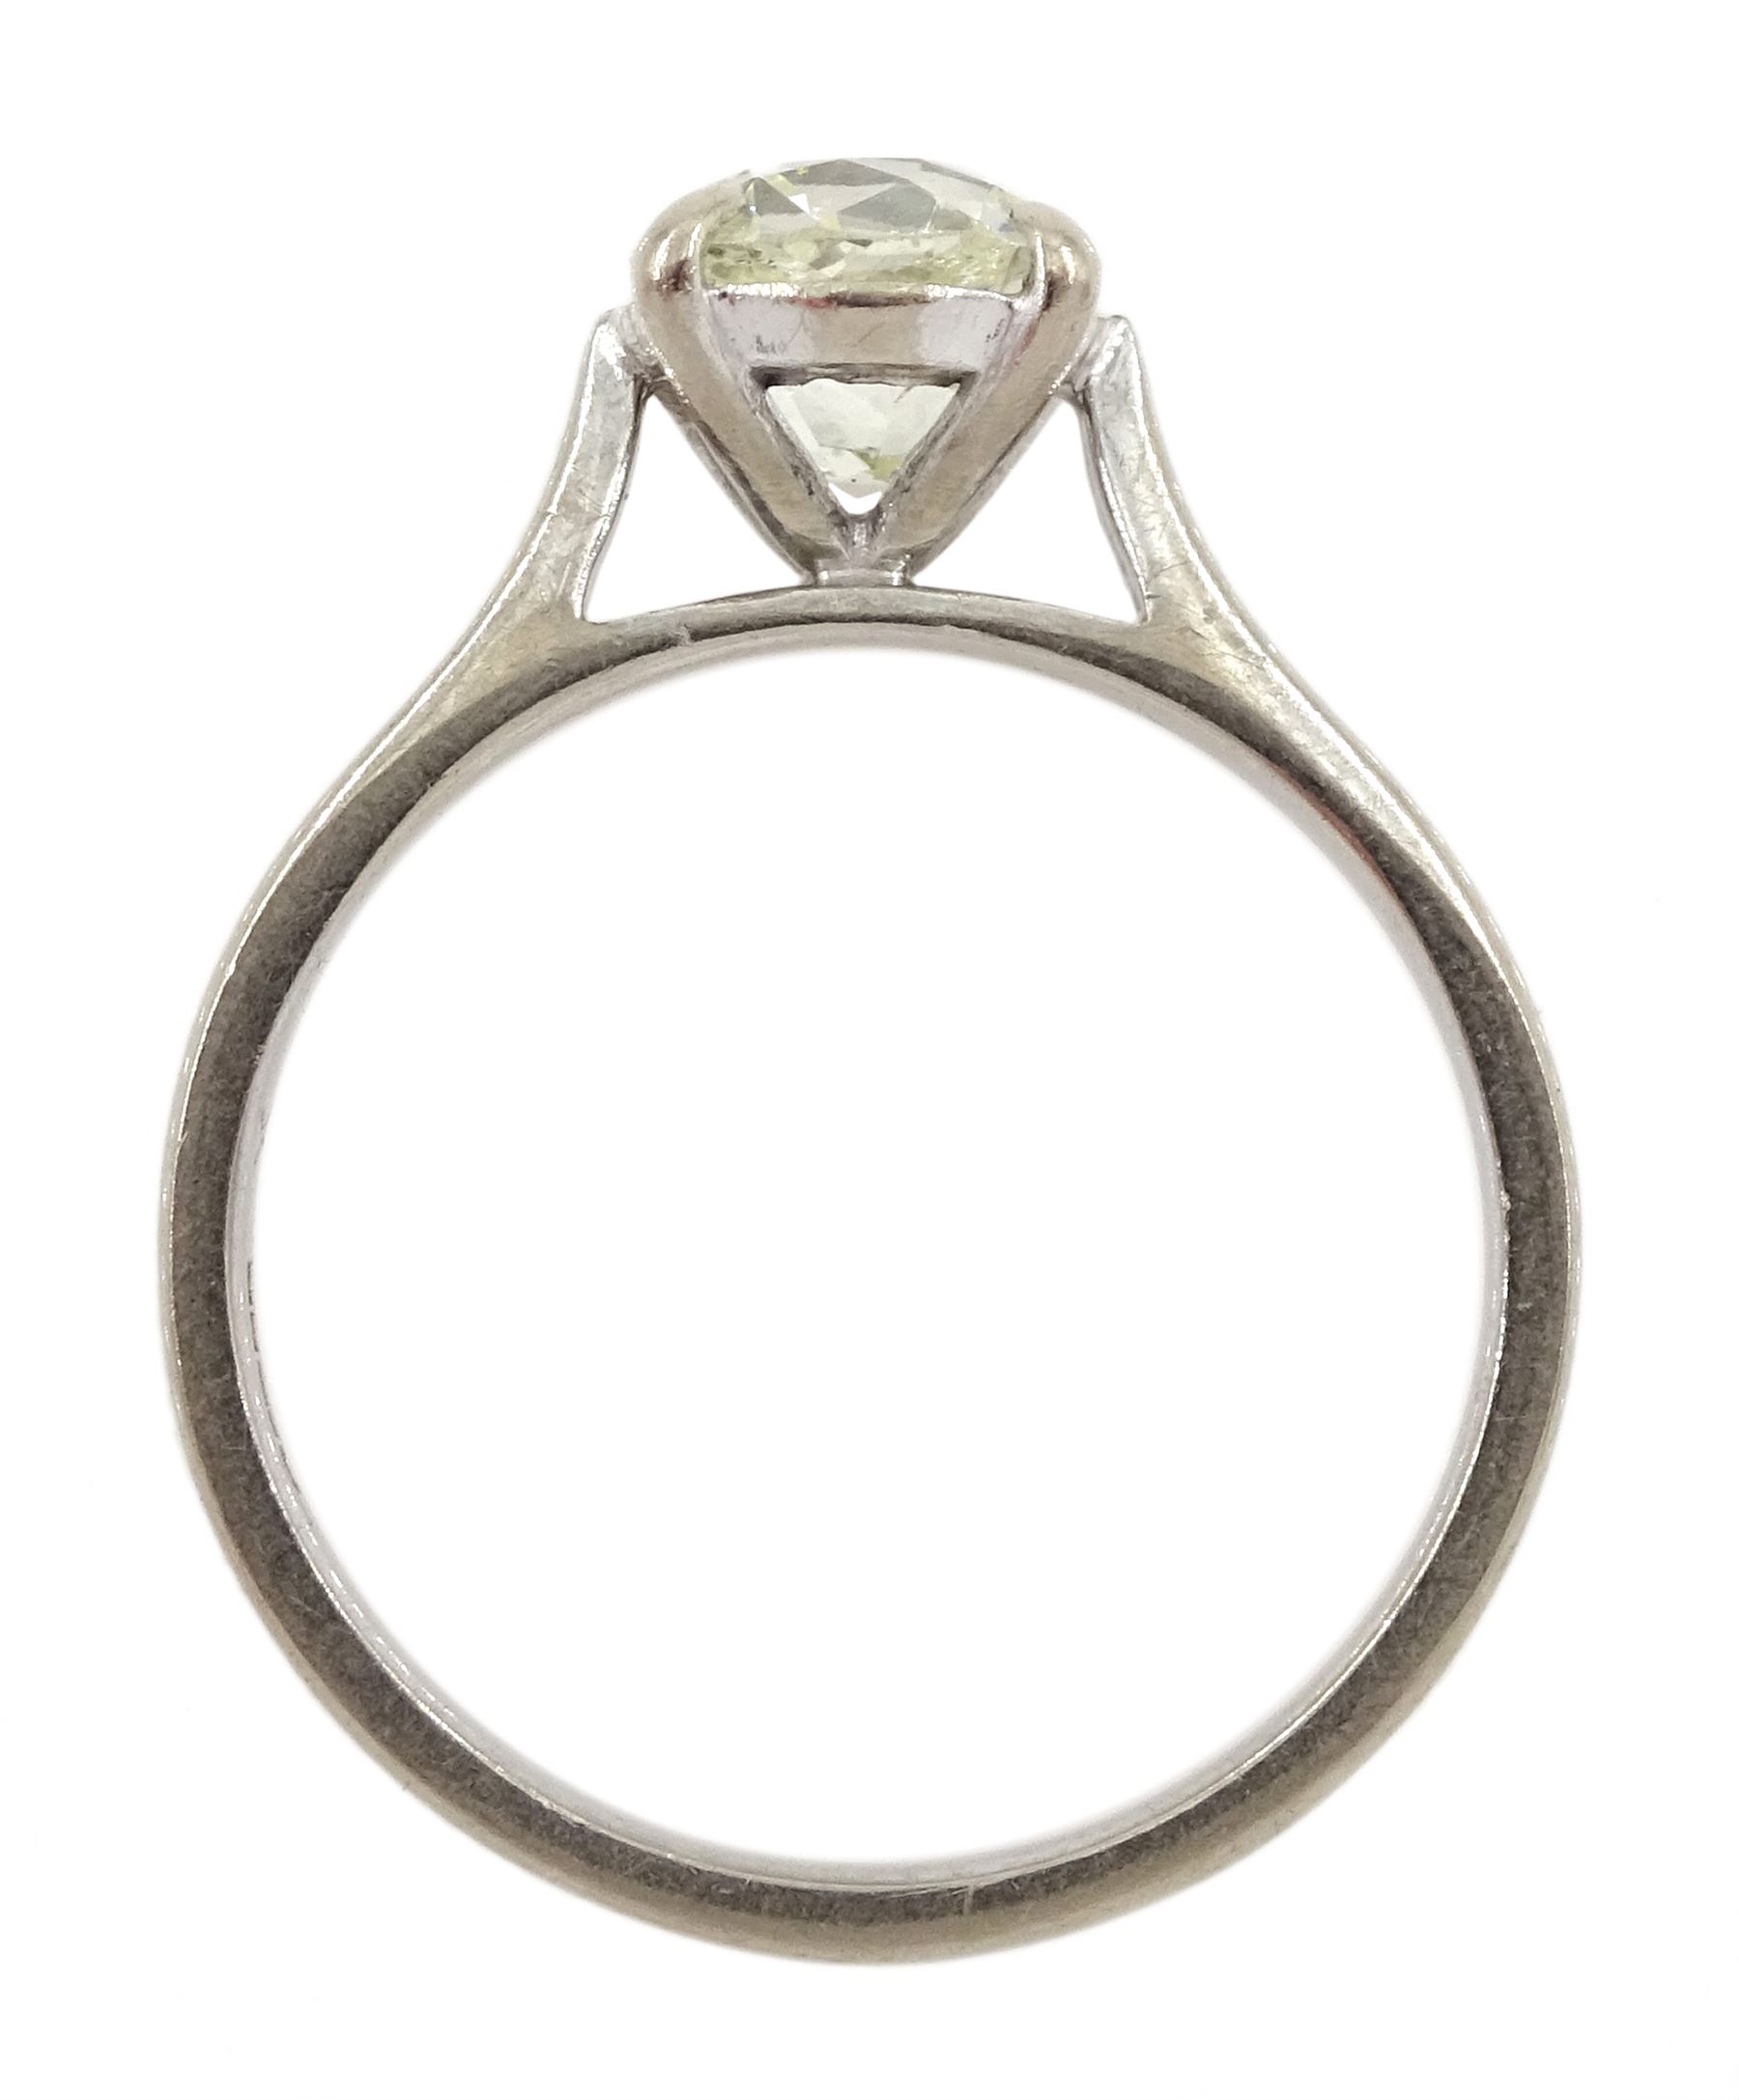 18ct white gold single stone old cut diamond ring - Image 4 of 4